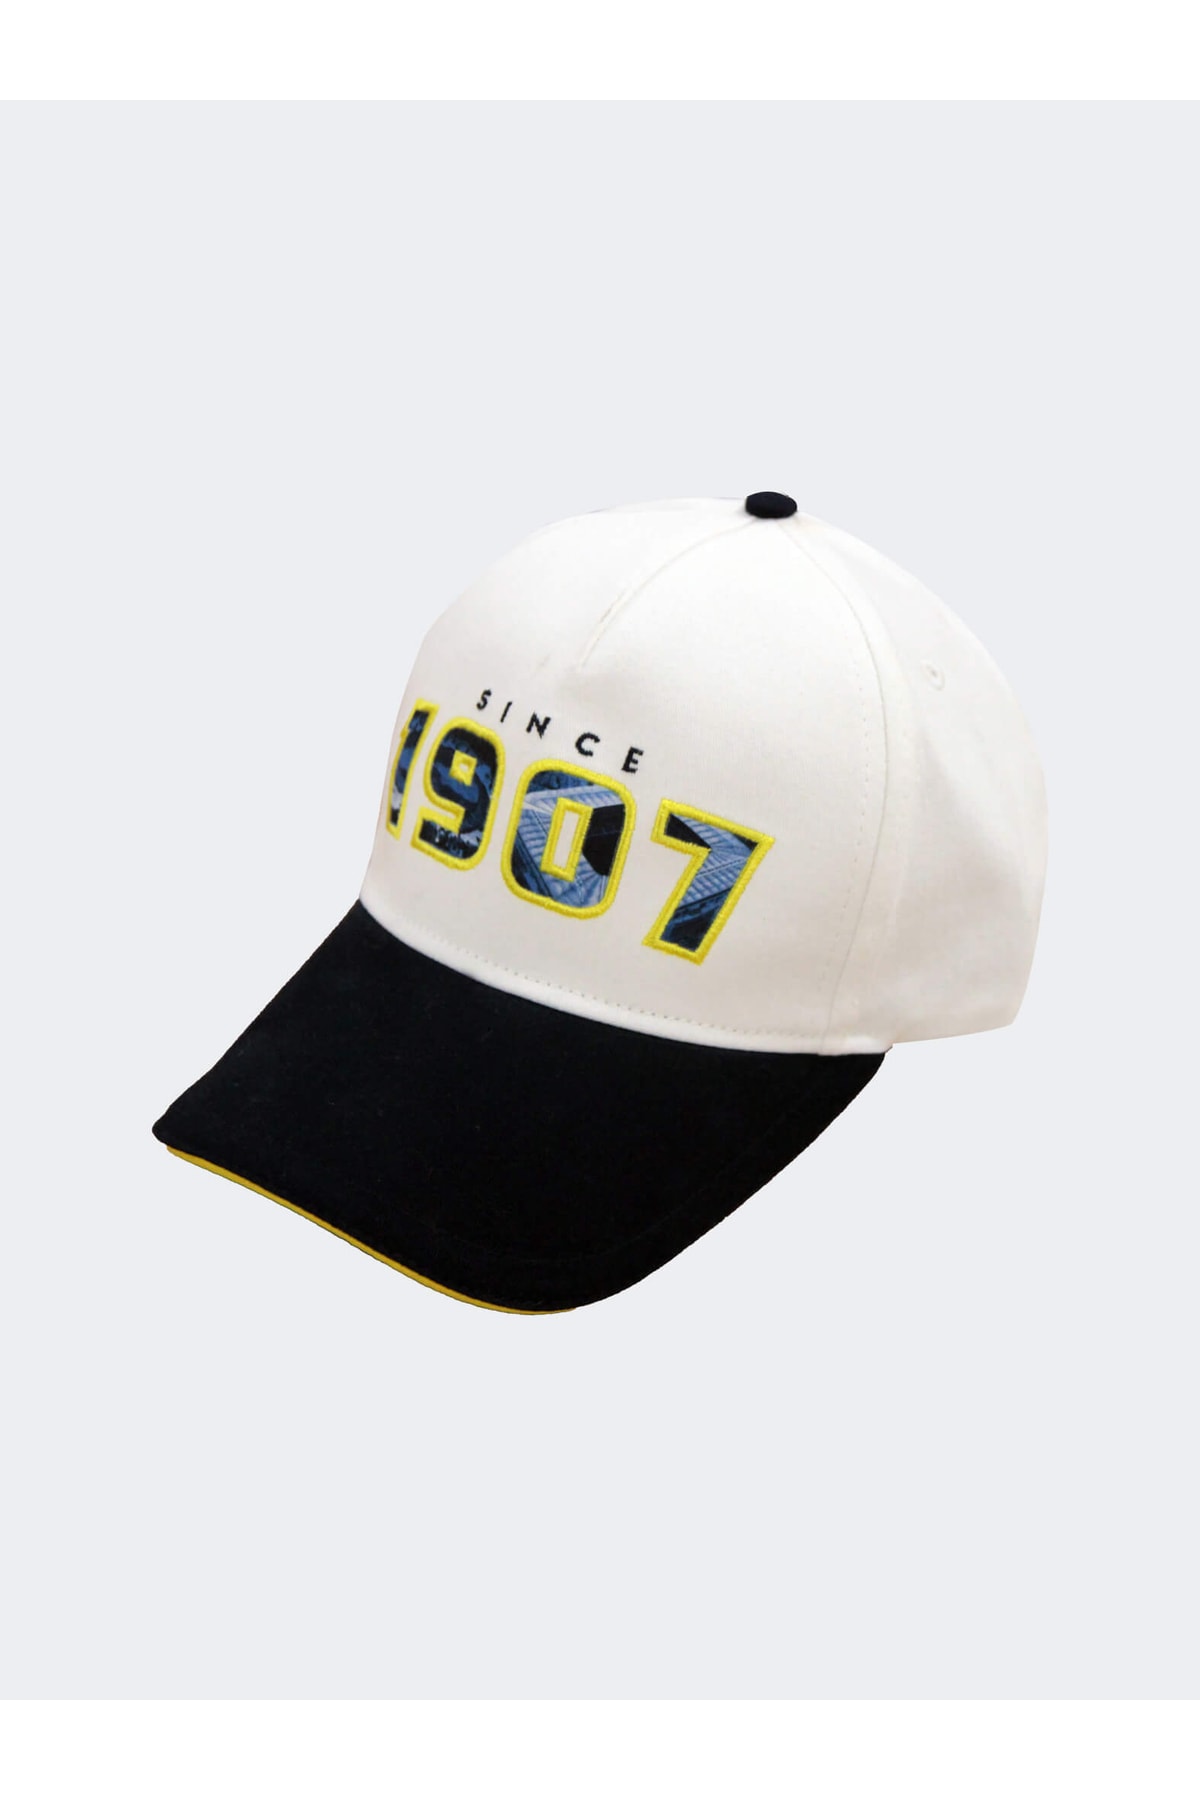 Fenerbahçe Unısex Sınce 1907 Şapka